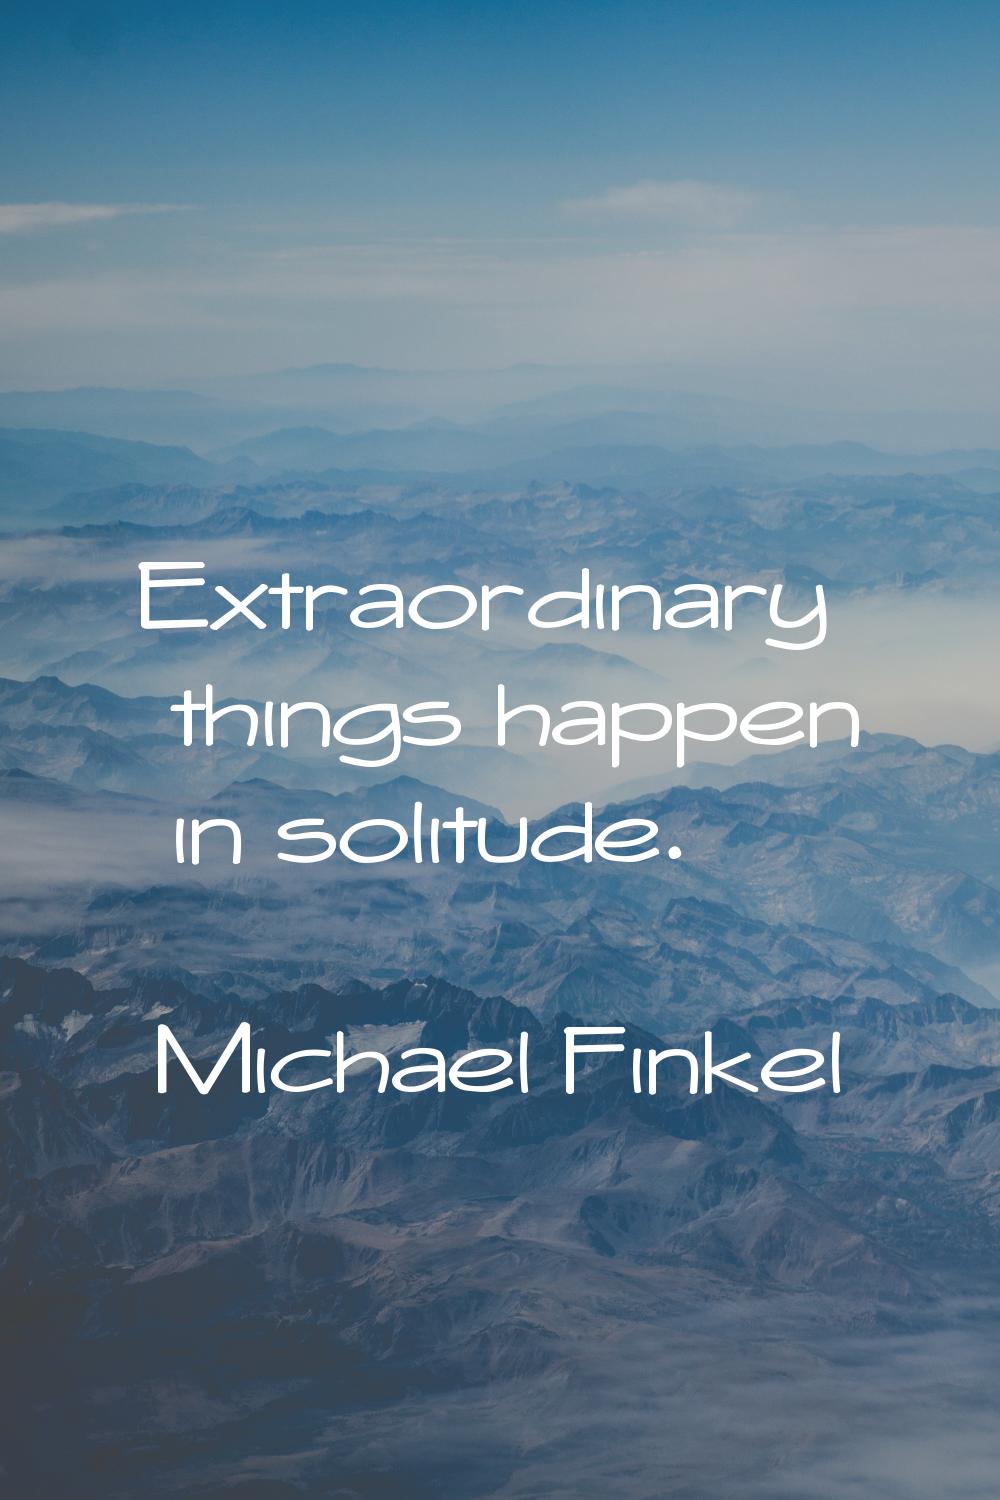 Extraordinary things happen in solitude.